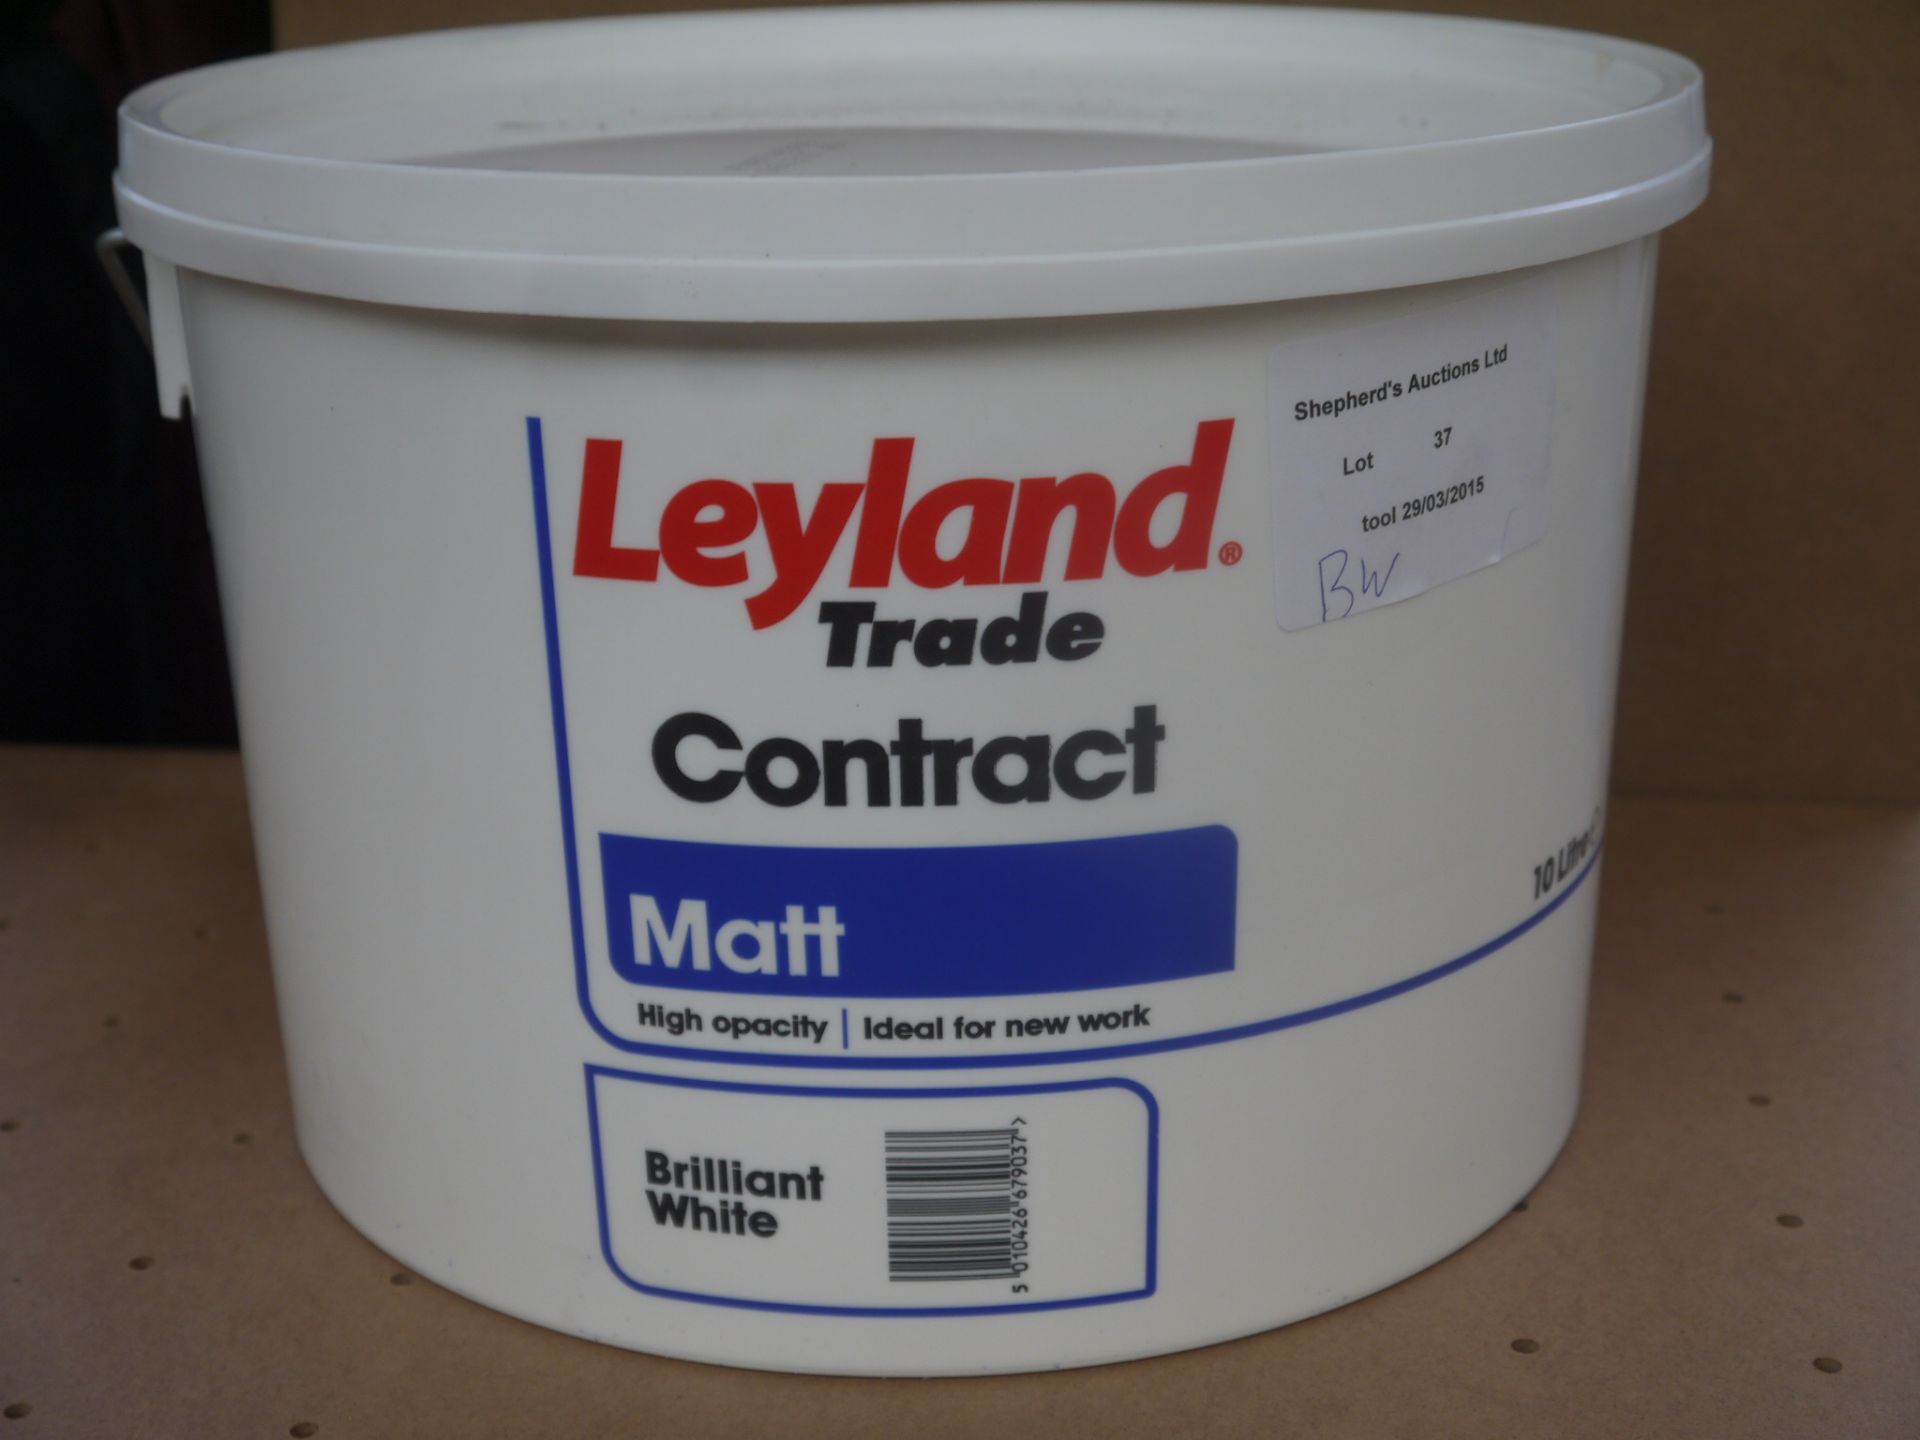 Leyland Trade Contract Matt Brilliant White Paint, 10 litre. New.